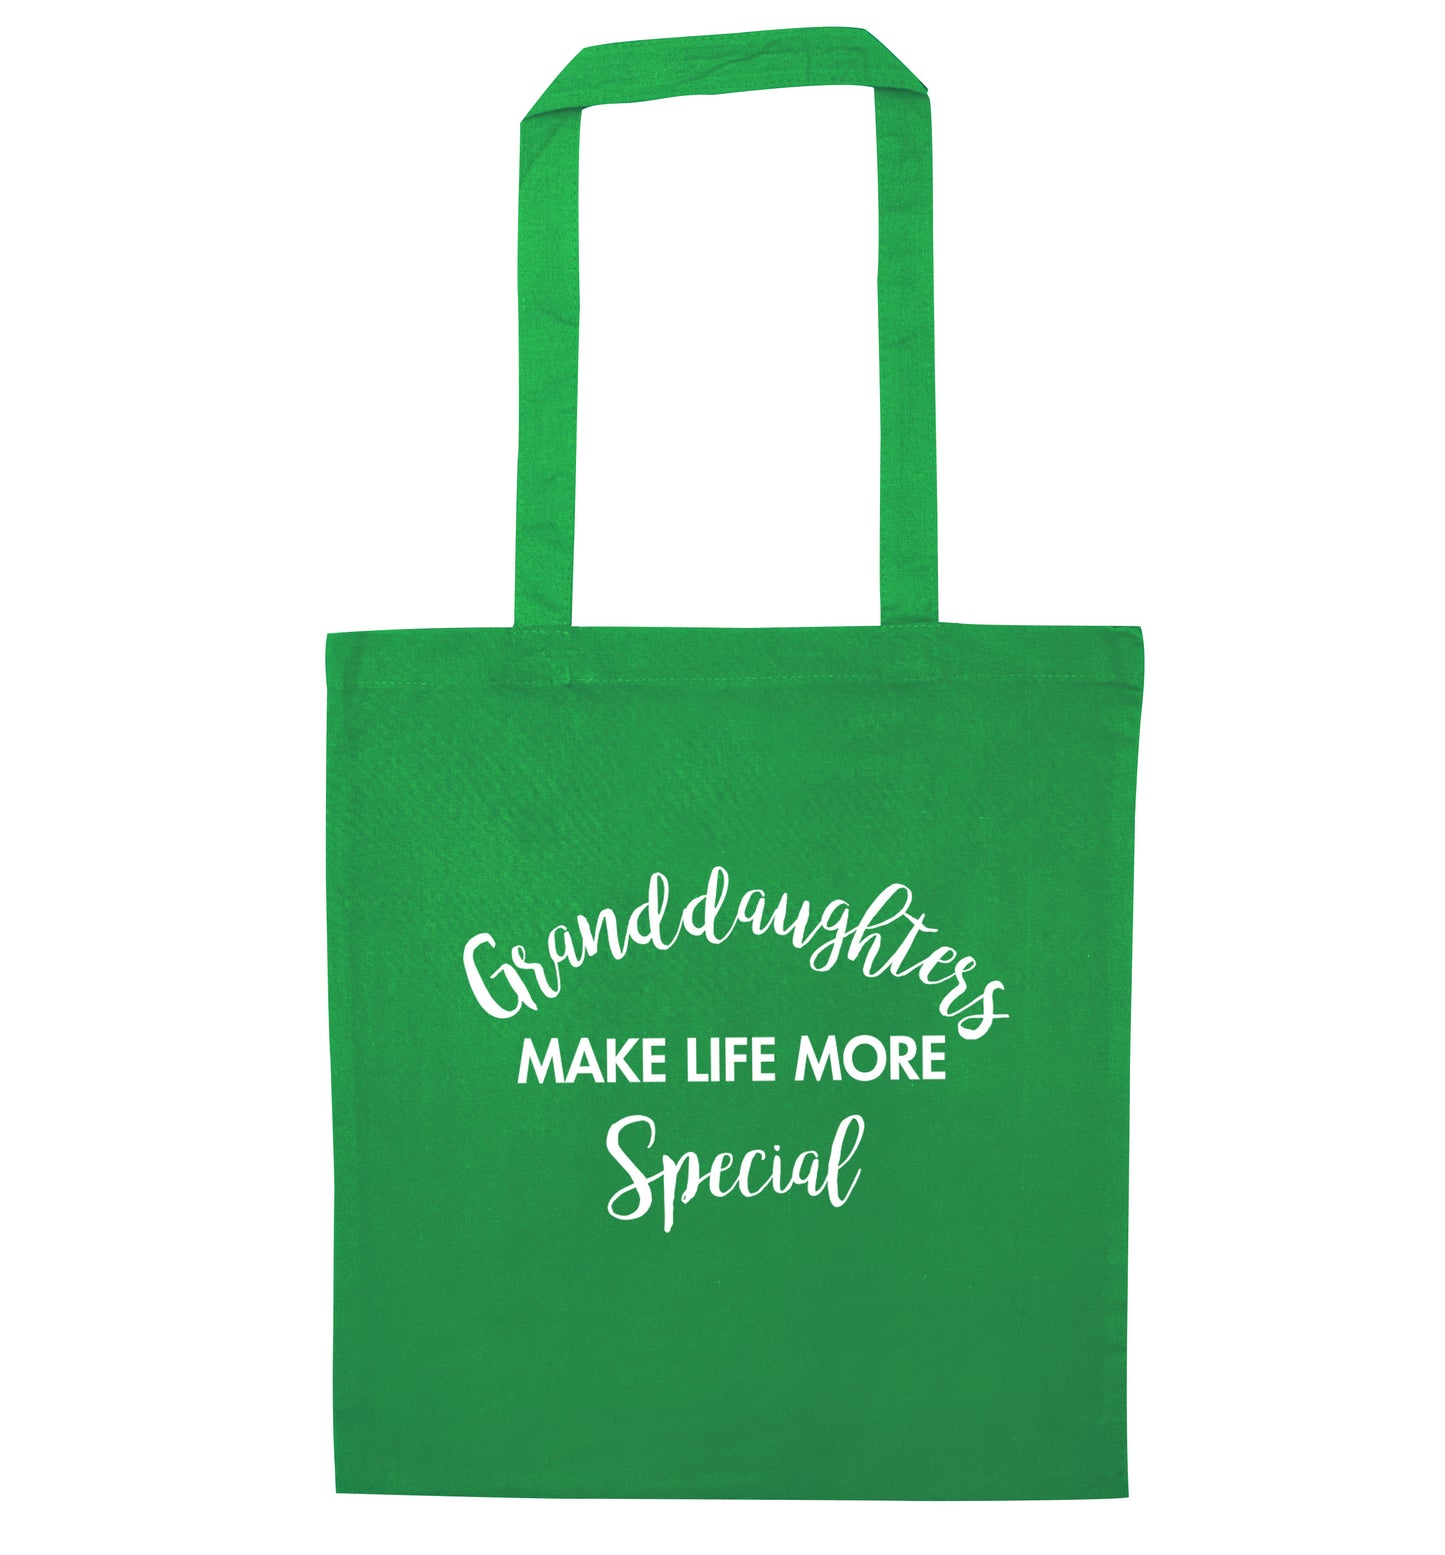 Granddaughters make life more special green tote bag